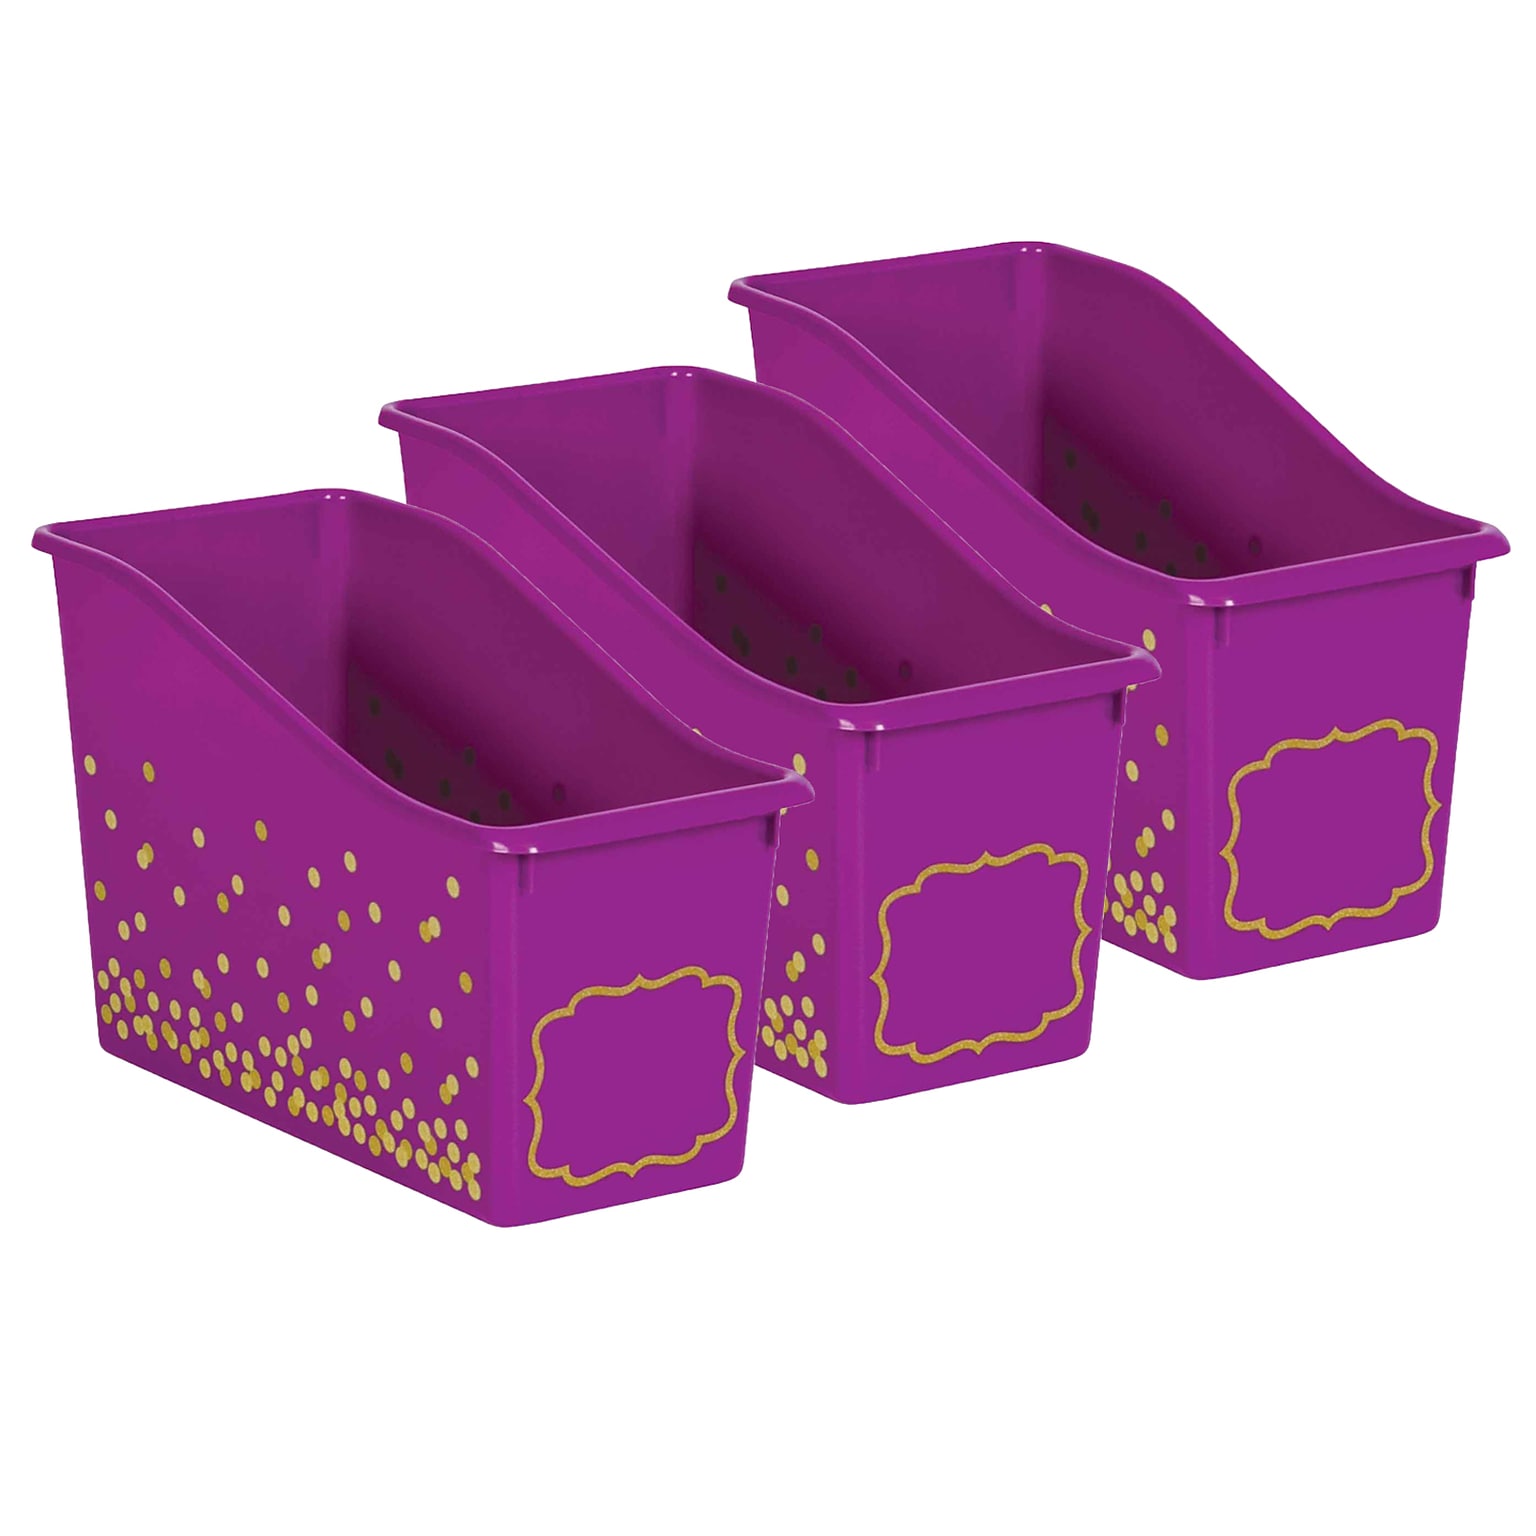 Teacher Created Resources® Plastic Book Bin, 5.5 x 11.38 x 7.5, Purple Confetti, Pack of 3 (TCR20339-3)